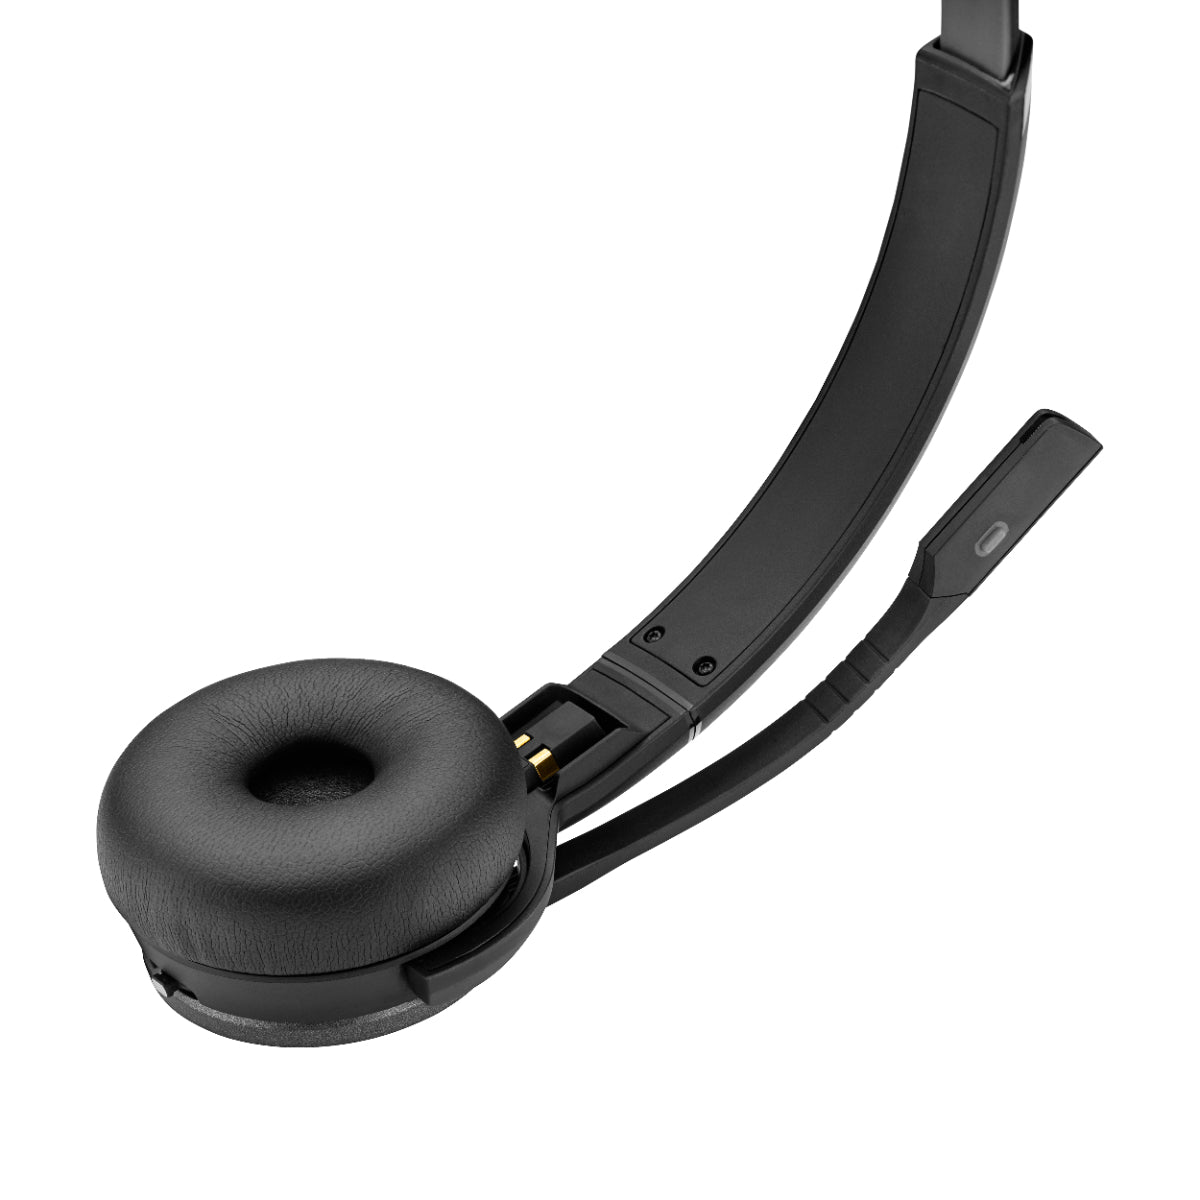 EPOS IMPACT SDW 5035 - EU Wireless Monaural DECT Headset, Black, With Dual Connectivity